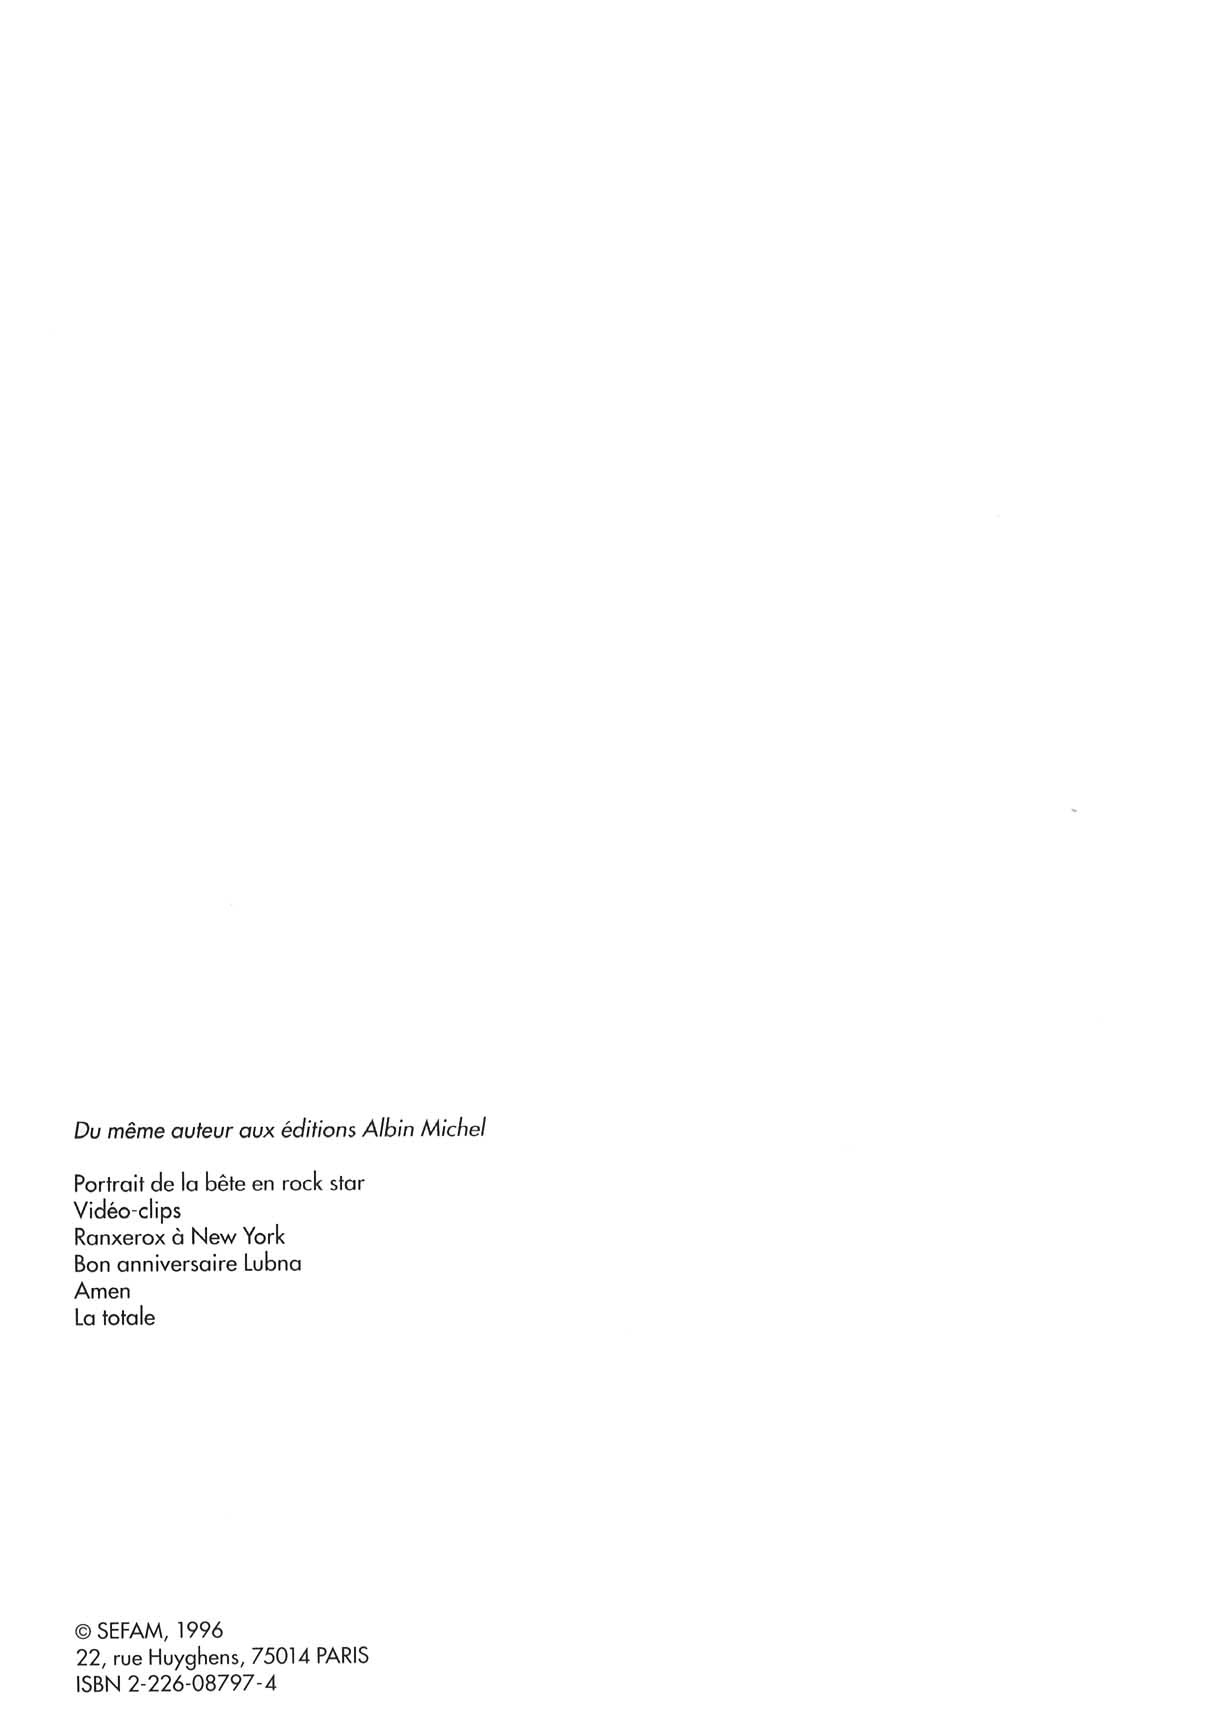 RanXerox - Vol. 1-3 + Bonus numero d'image 98